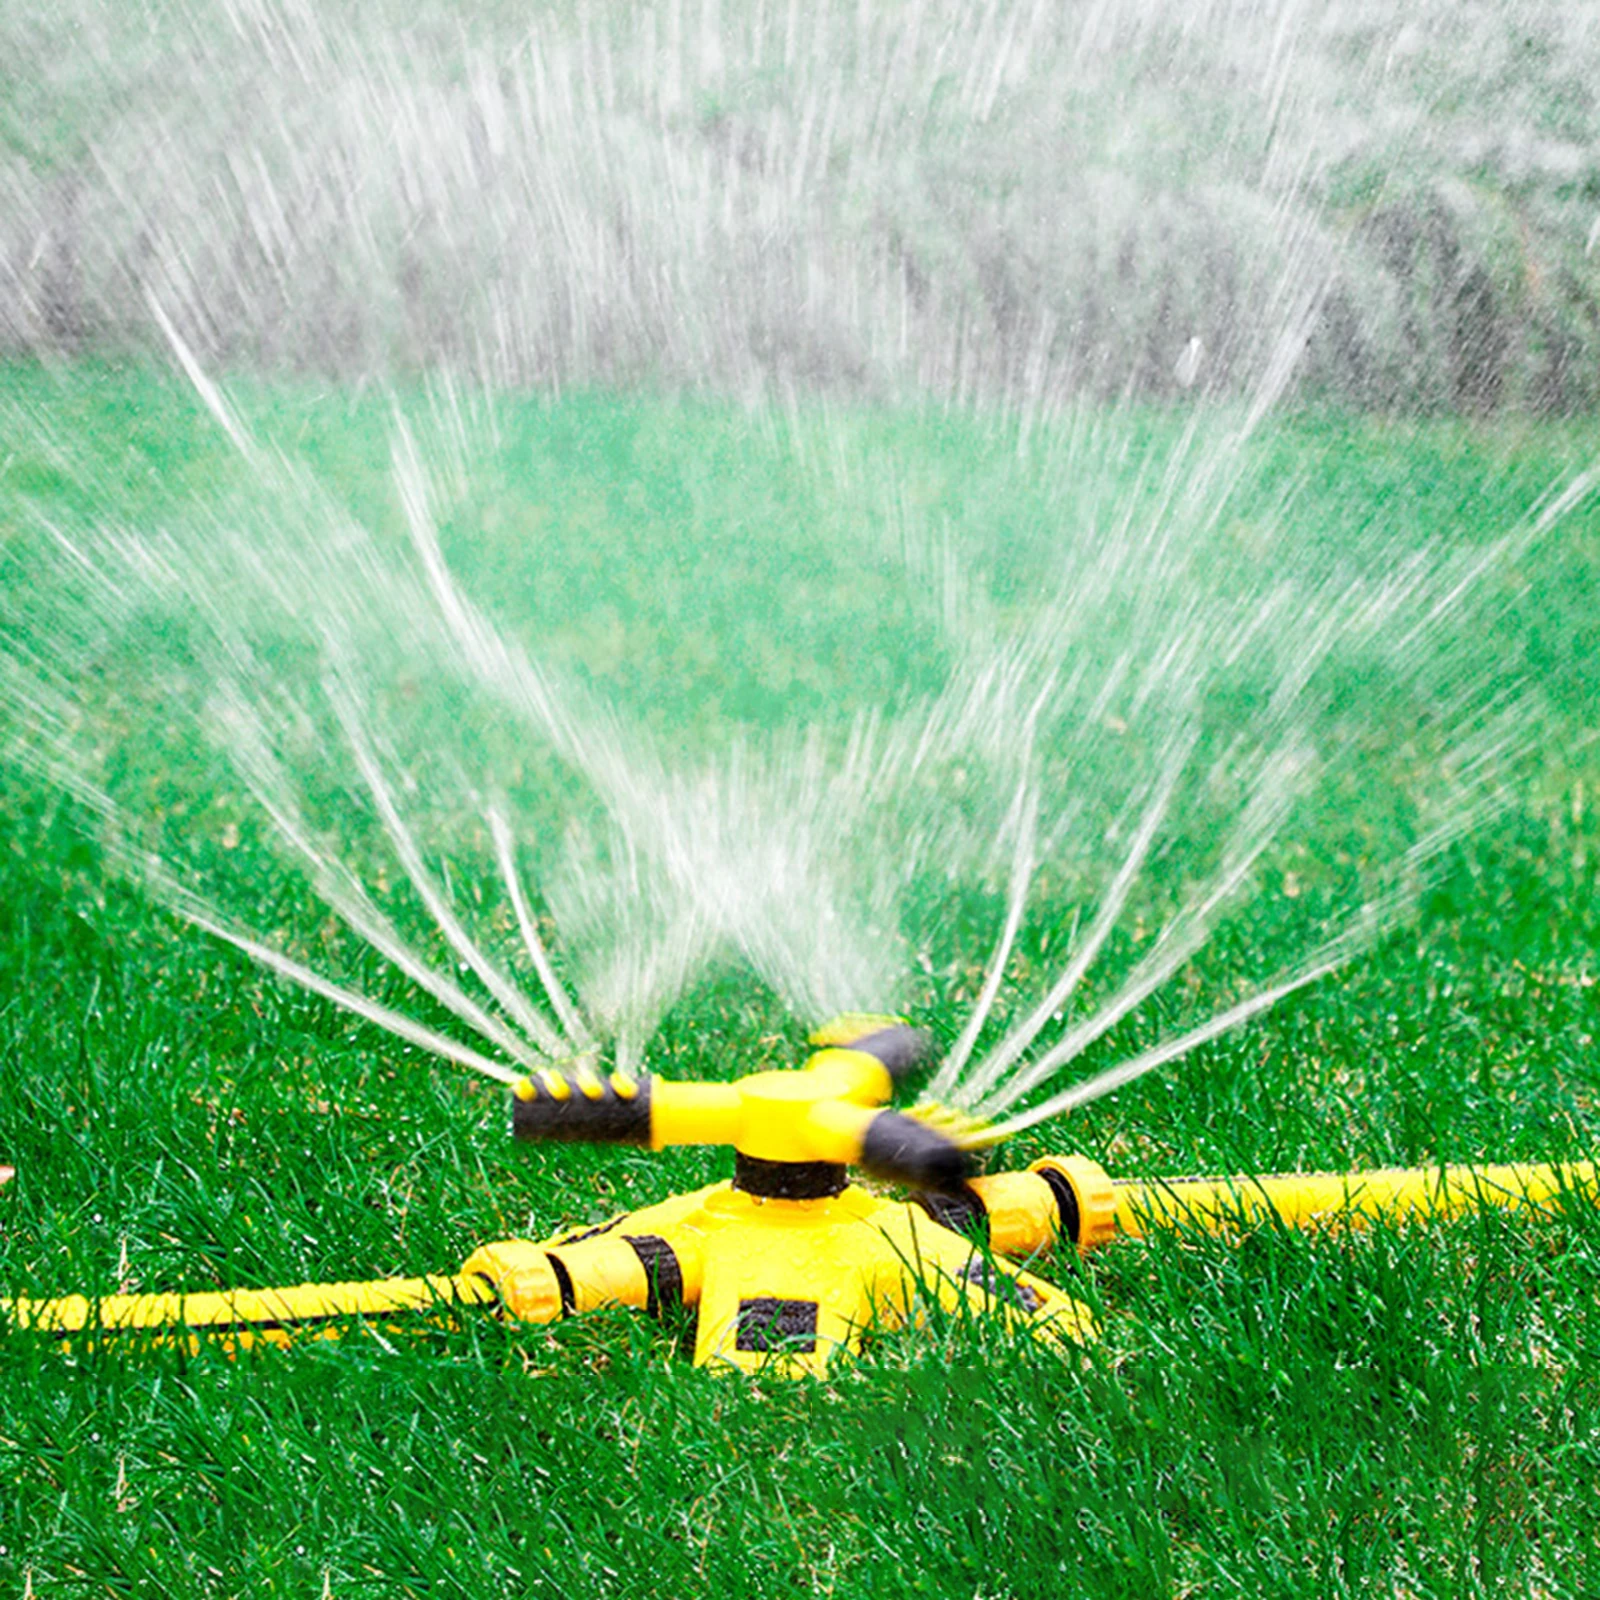 360 Rotating Lawn Sprinkler 3 Arms Garden Yard Plants Grass Greenhouse Flowerbed Fields Gardening Vegetables Watering